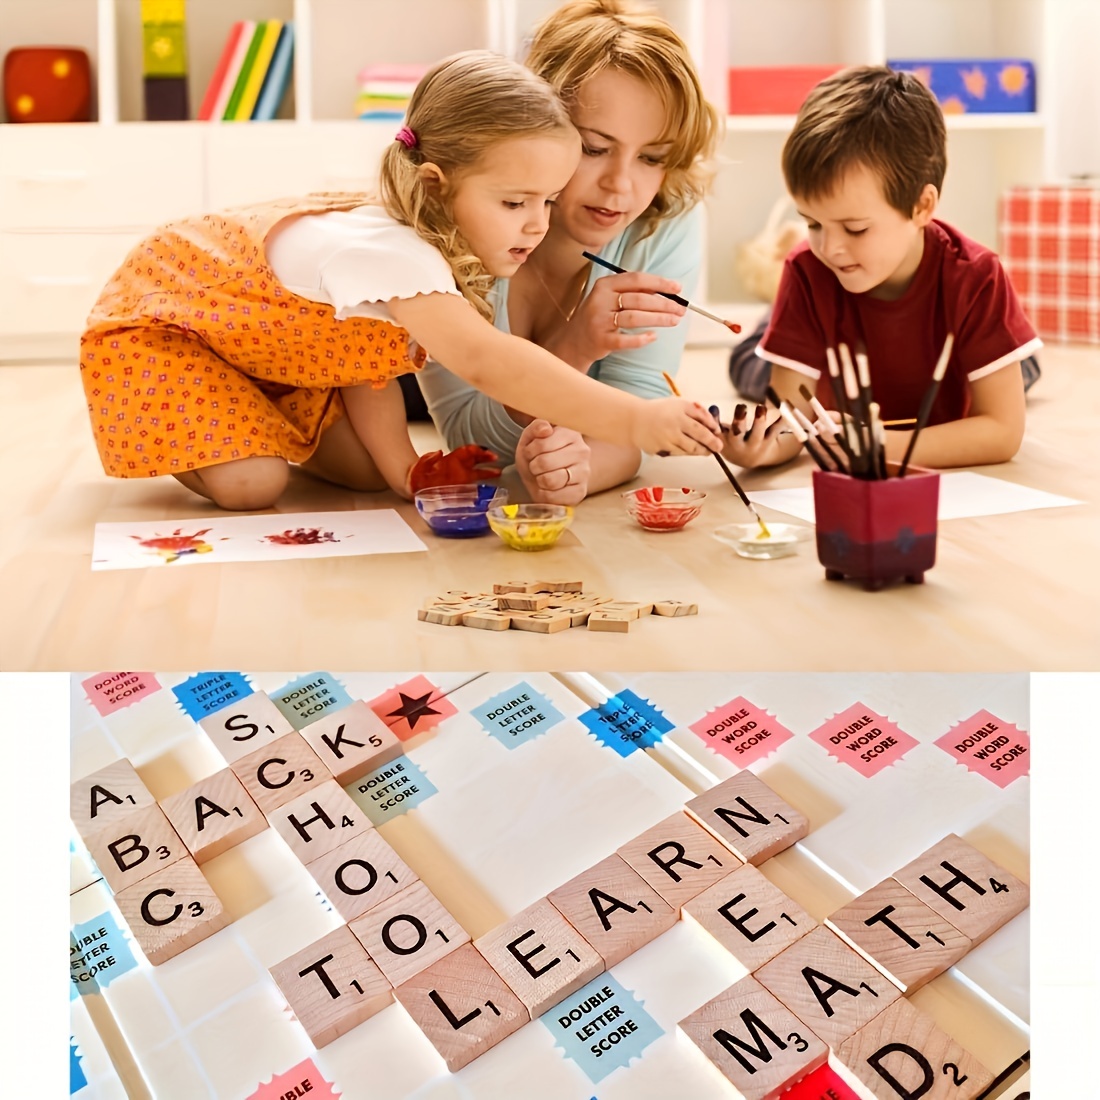 Justice Scrabble Tiles - 100 Scrabble Tiles - Plastic Scrabble Tiles -  Letter Tiles for Crafts - Game Pieces - Board Game Craft